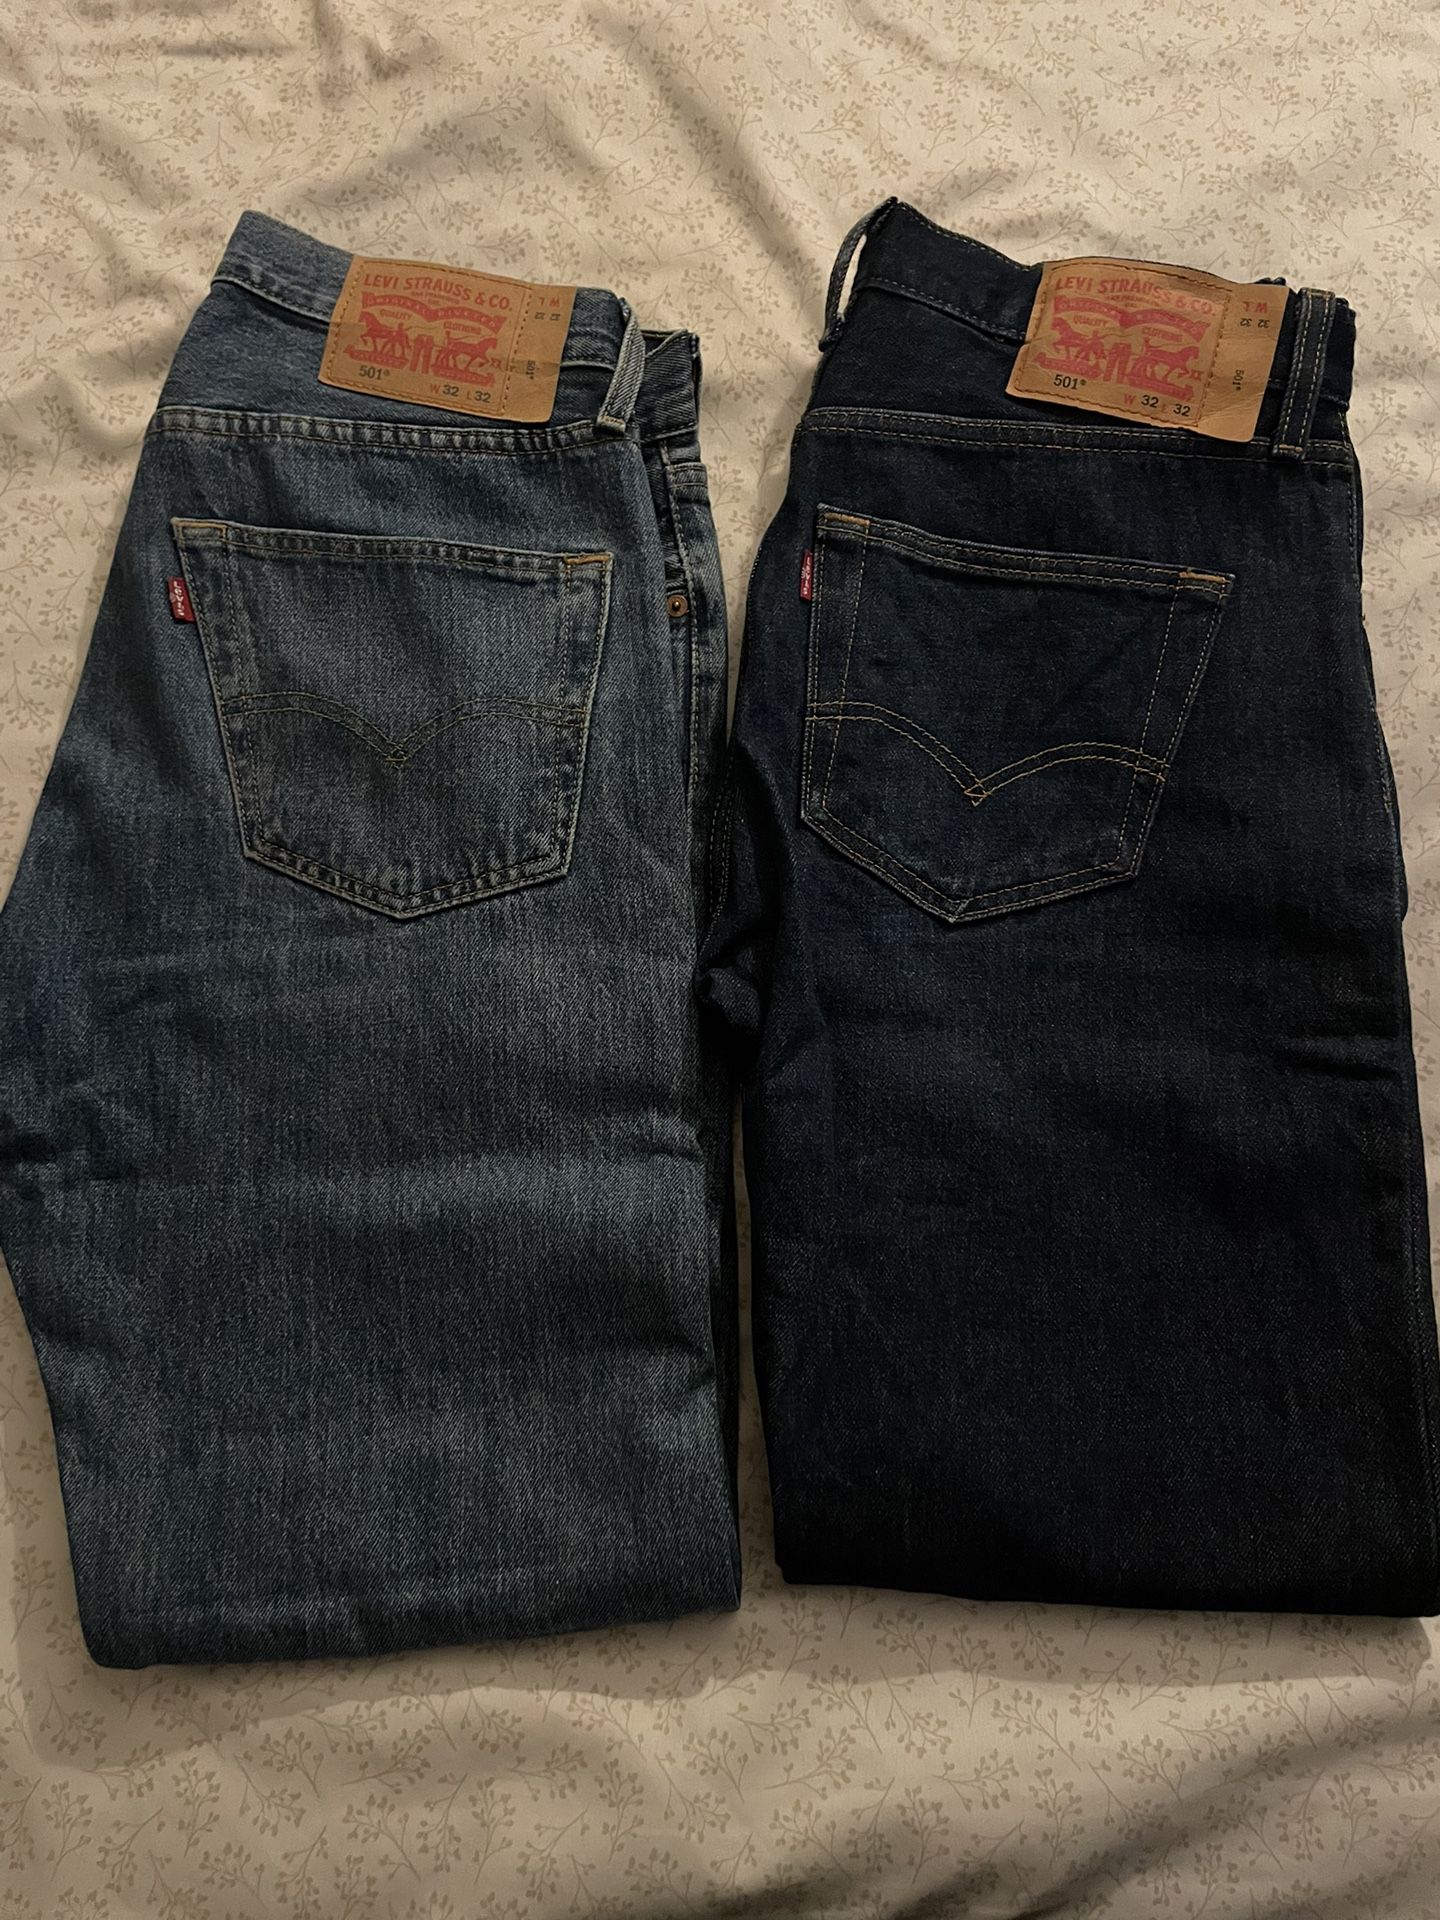 2 Pairs Of Levi’s 501 Men’s Jeans Size: 32x32